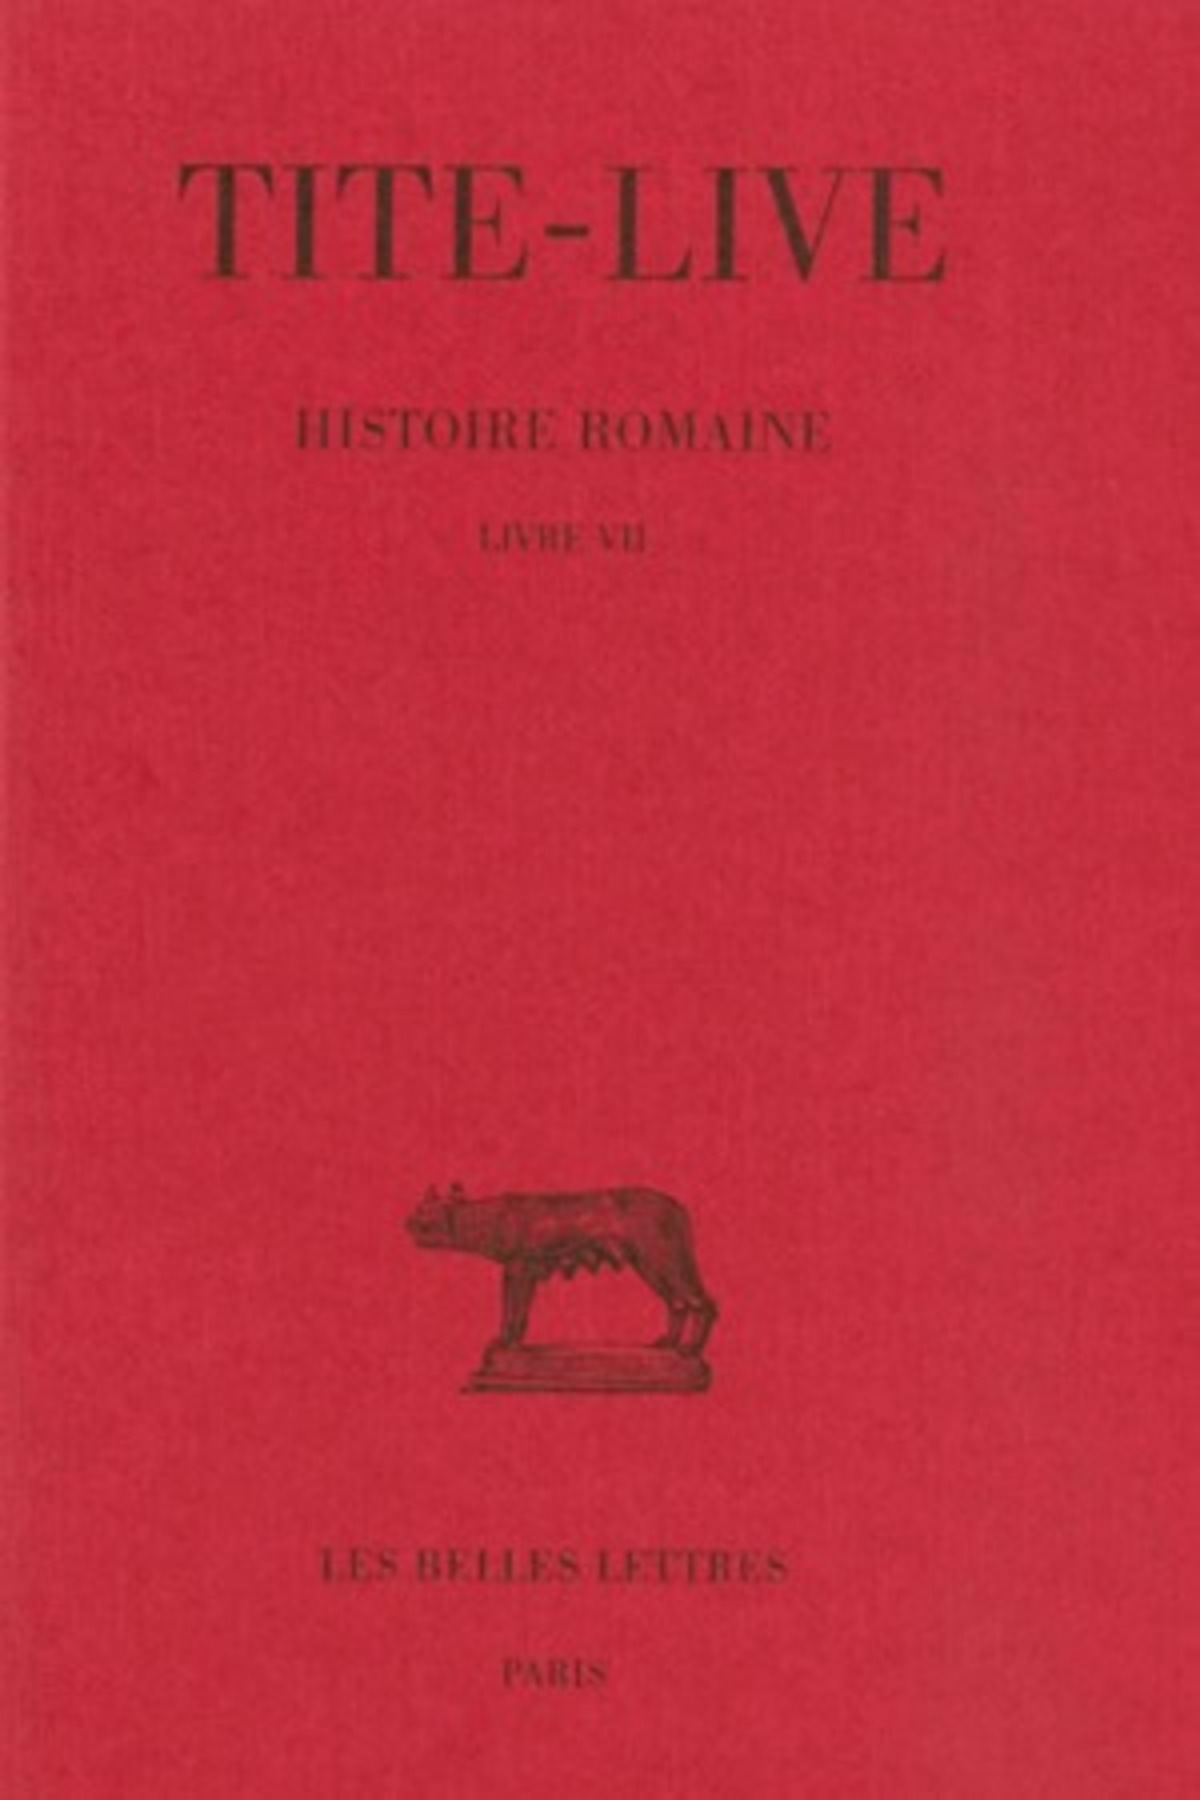 Histoire romaine. Tome VII : Livre VII